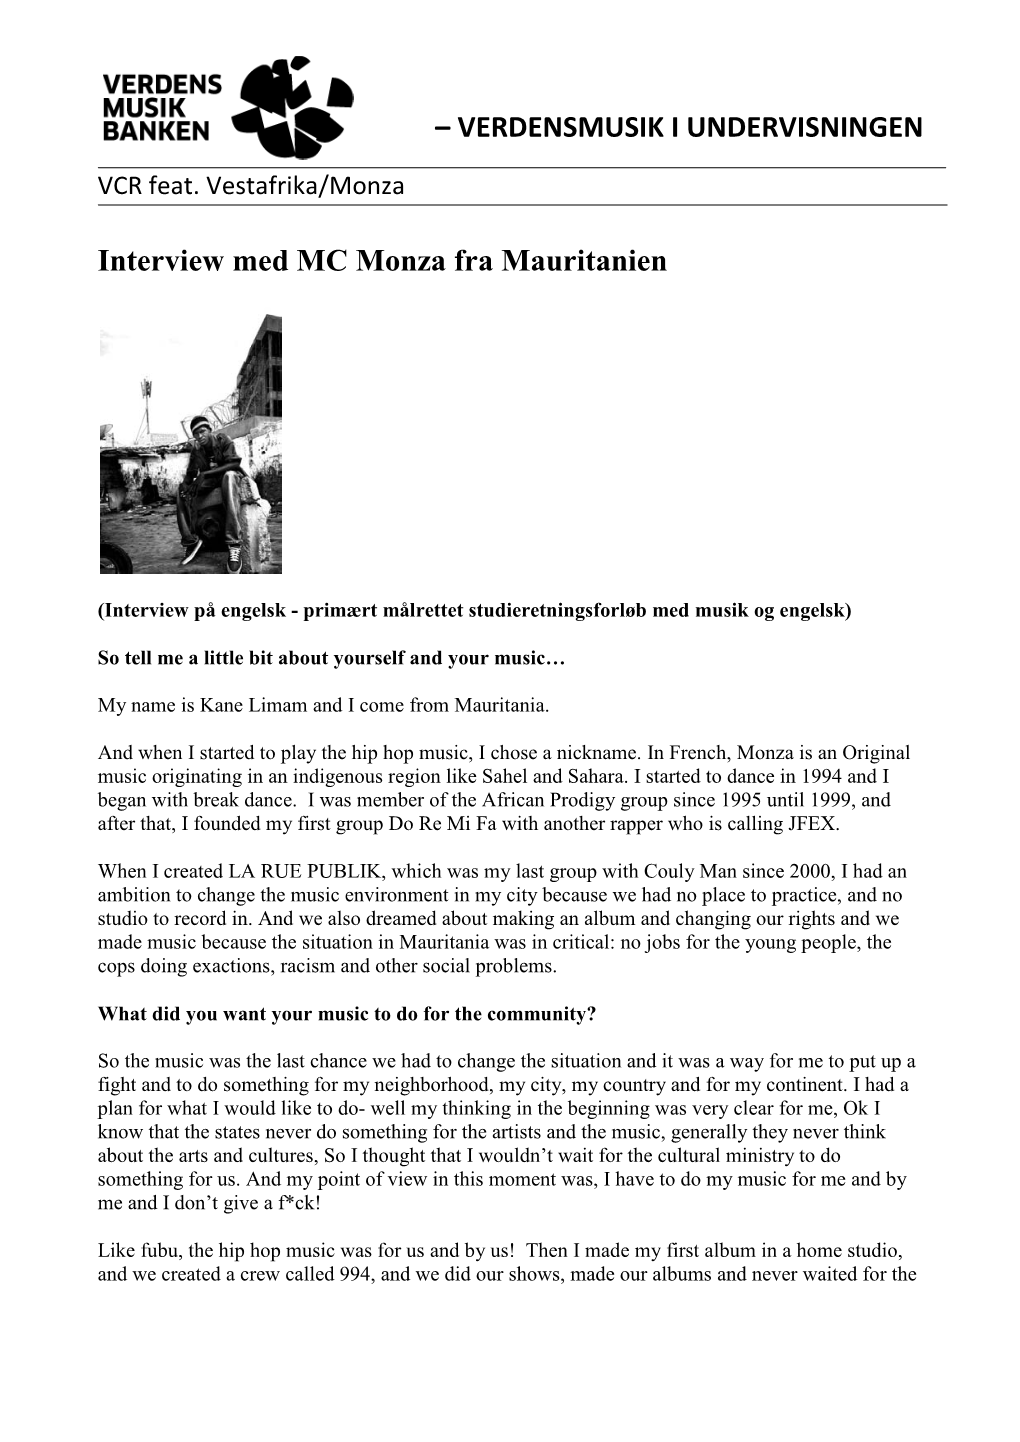 VERDENSMUSIK I UNDERVISNINGEN Interview Med MC Monza Fra Mauritanien